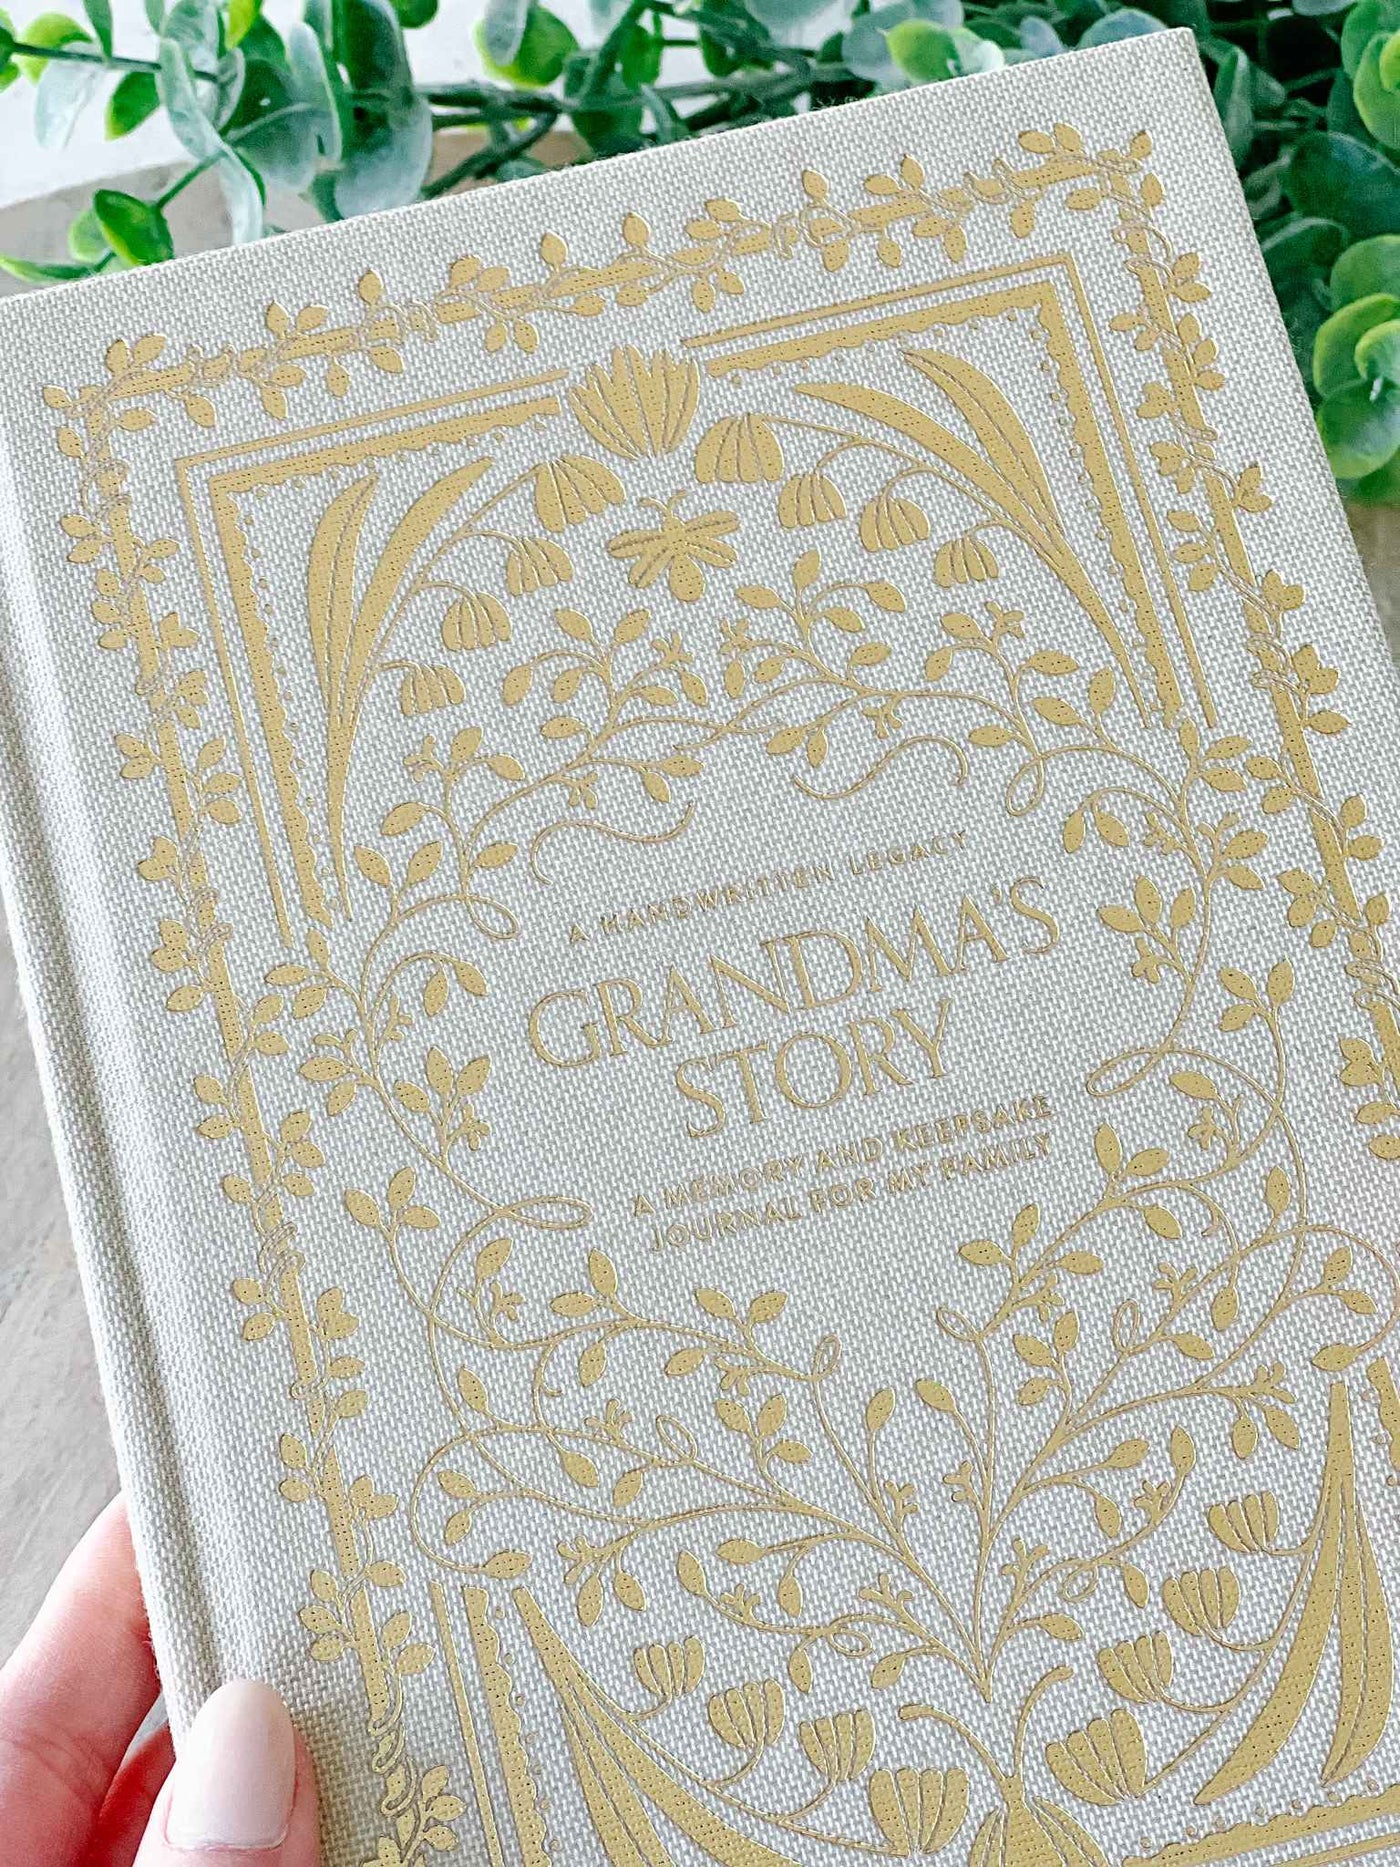 Grandma's Story - Keepsake Memory Book